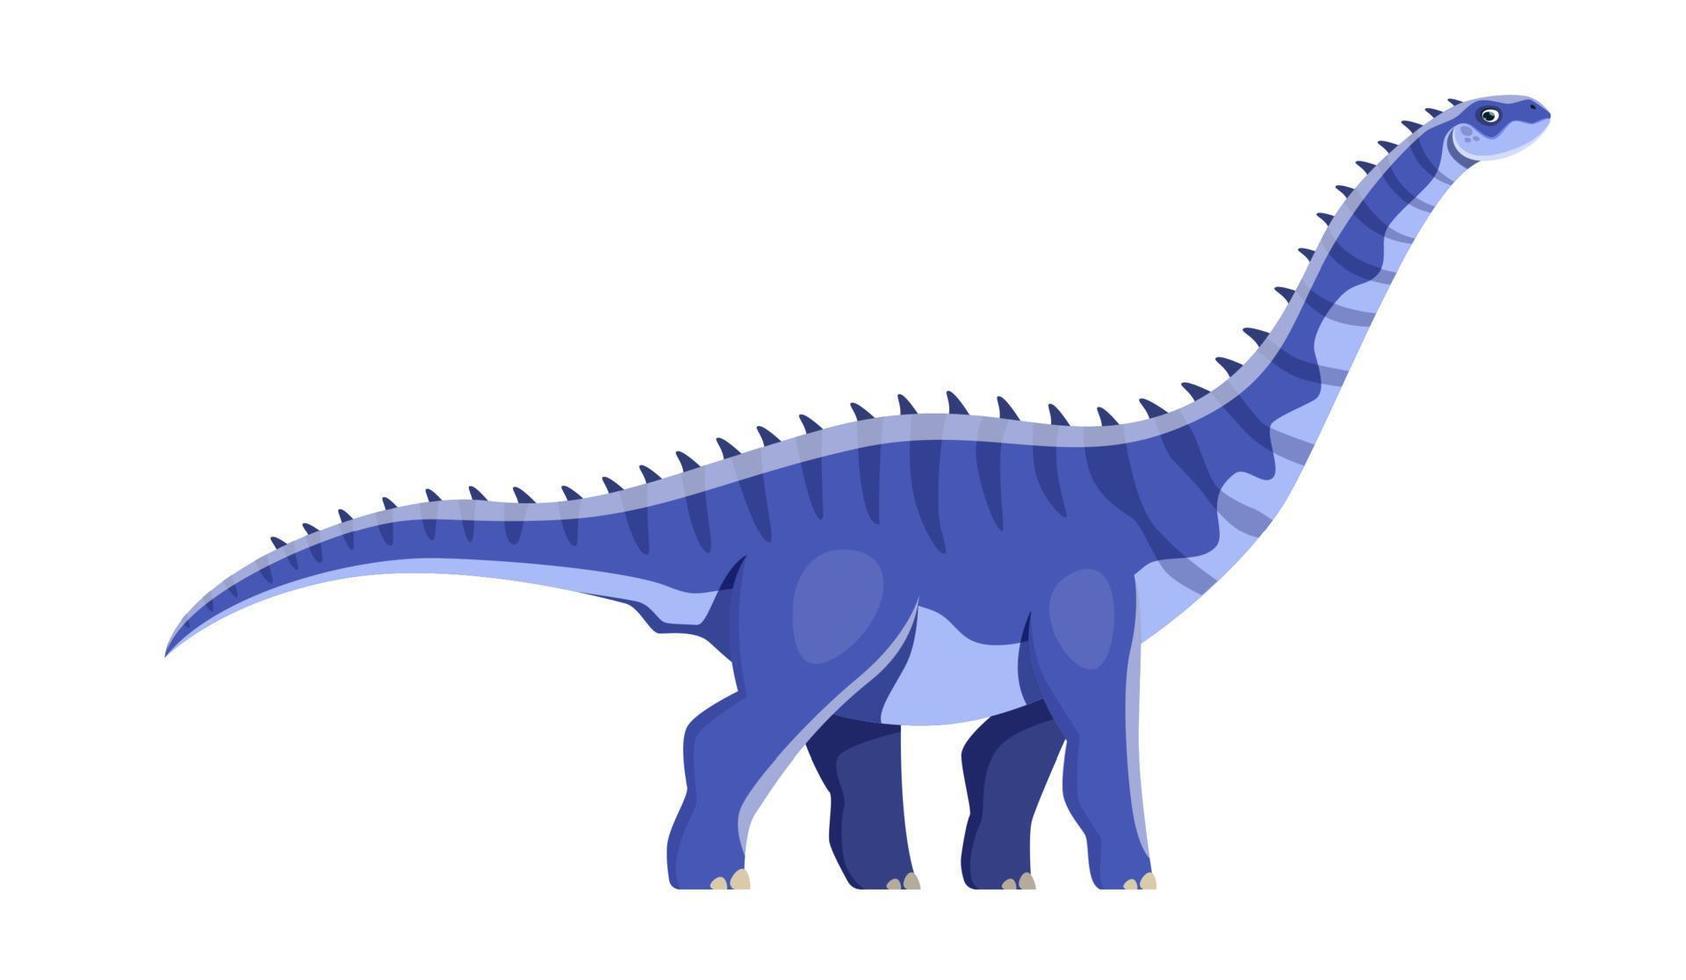 Cartoon Hypselosaurus dinosaur character, dino vector